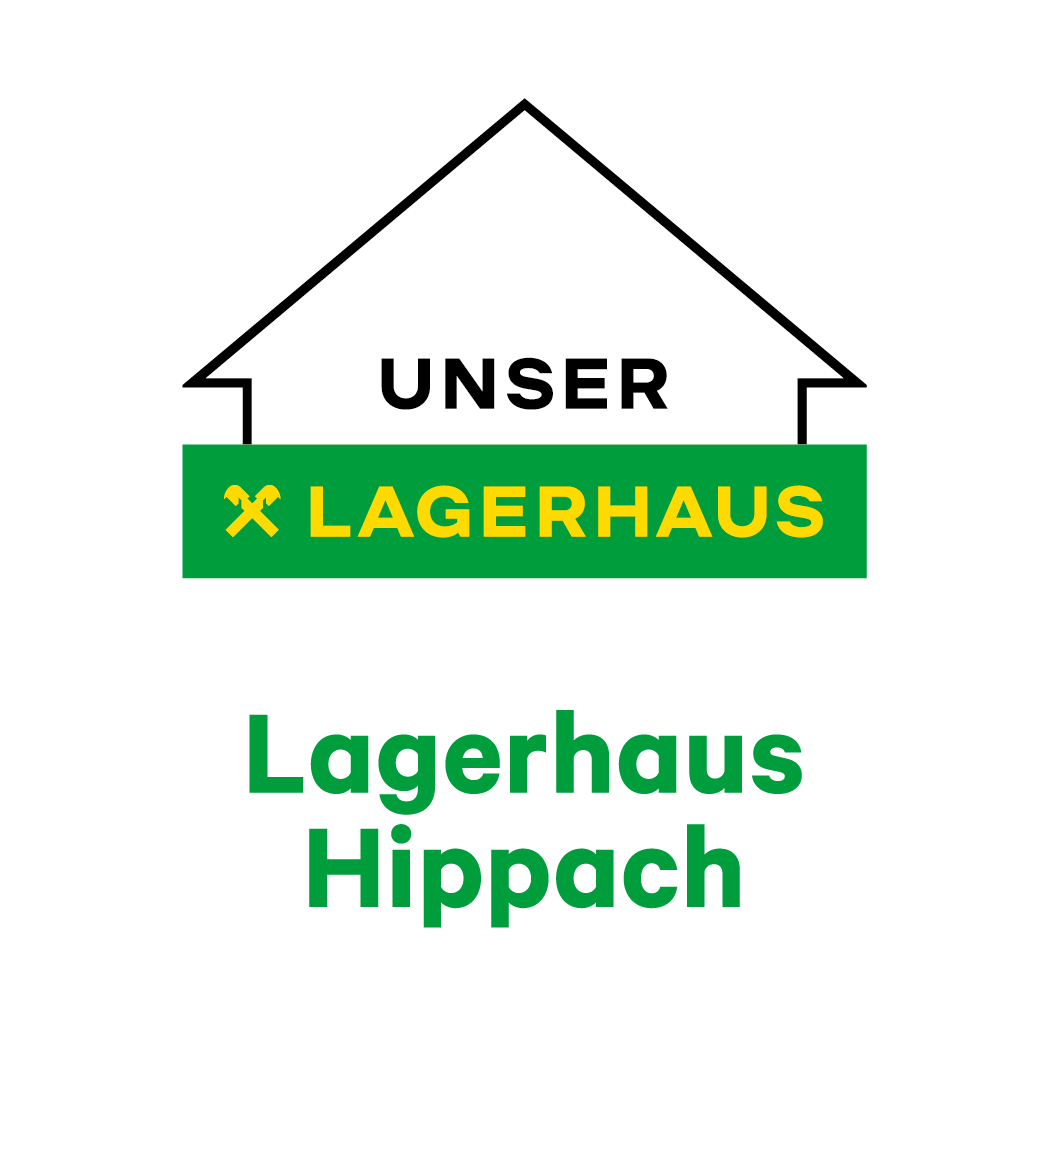 Lagerhaus Hippach Partner 01